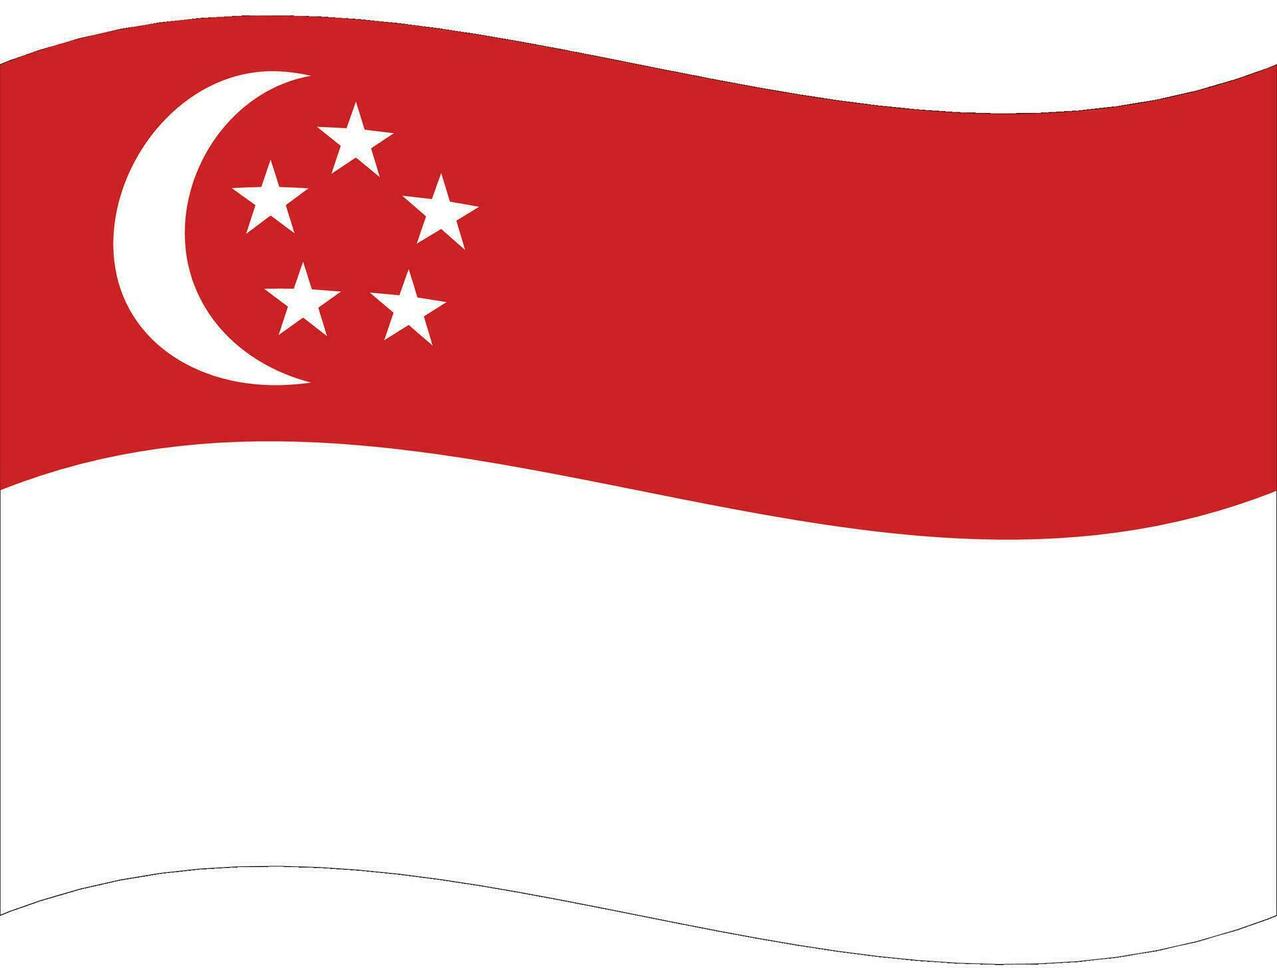 Singapur bandera ola. Singapur bandera. bandera de Singapur vector